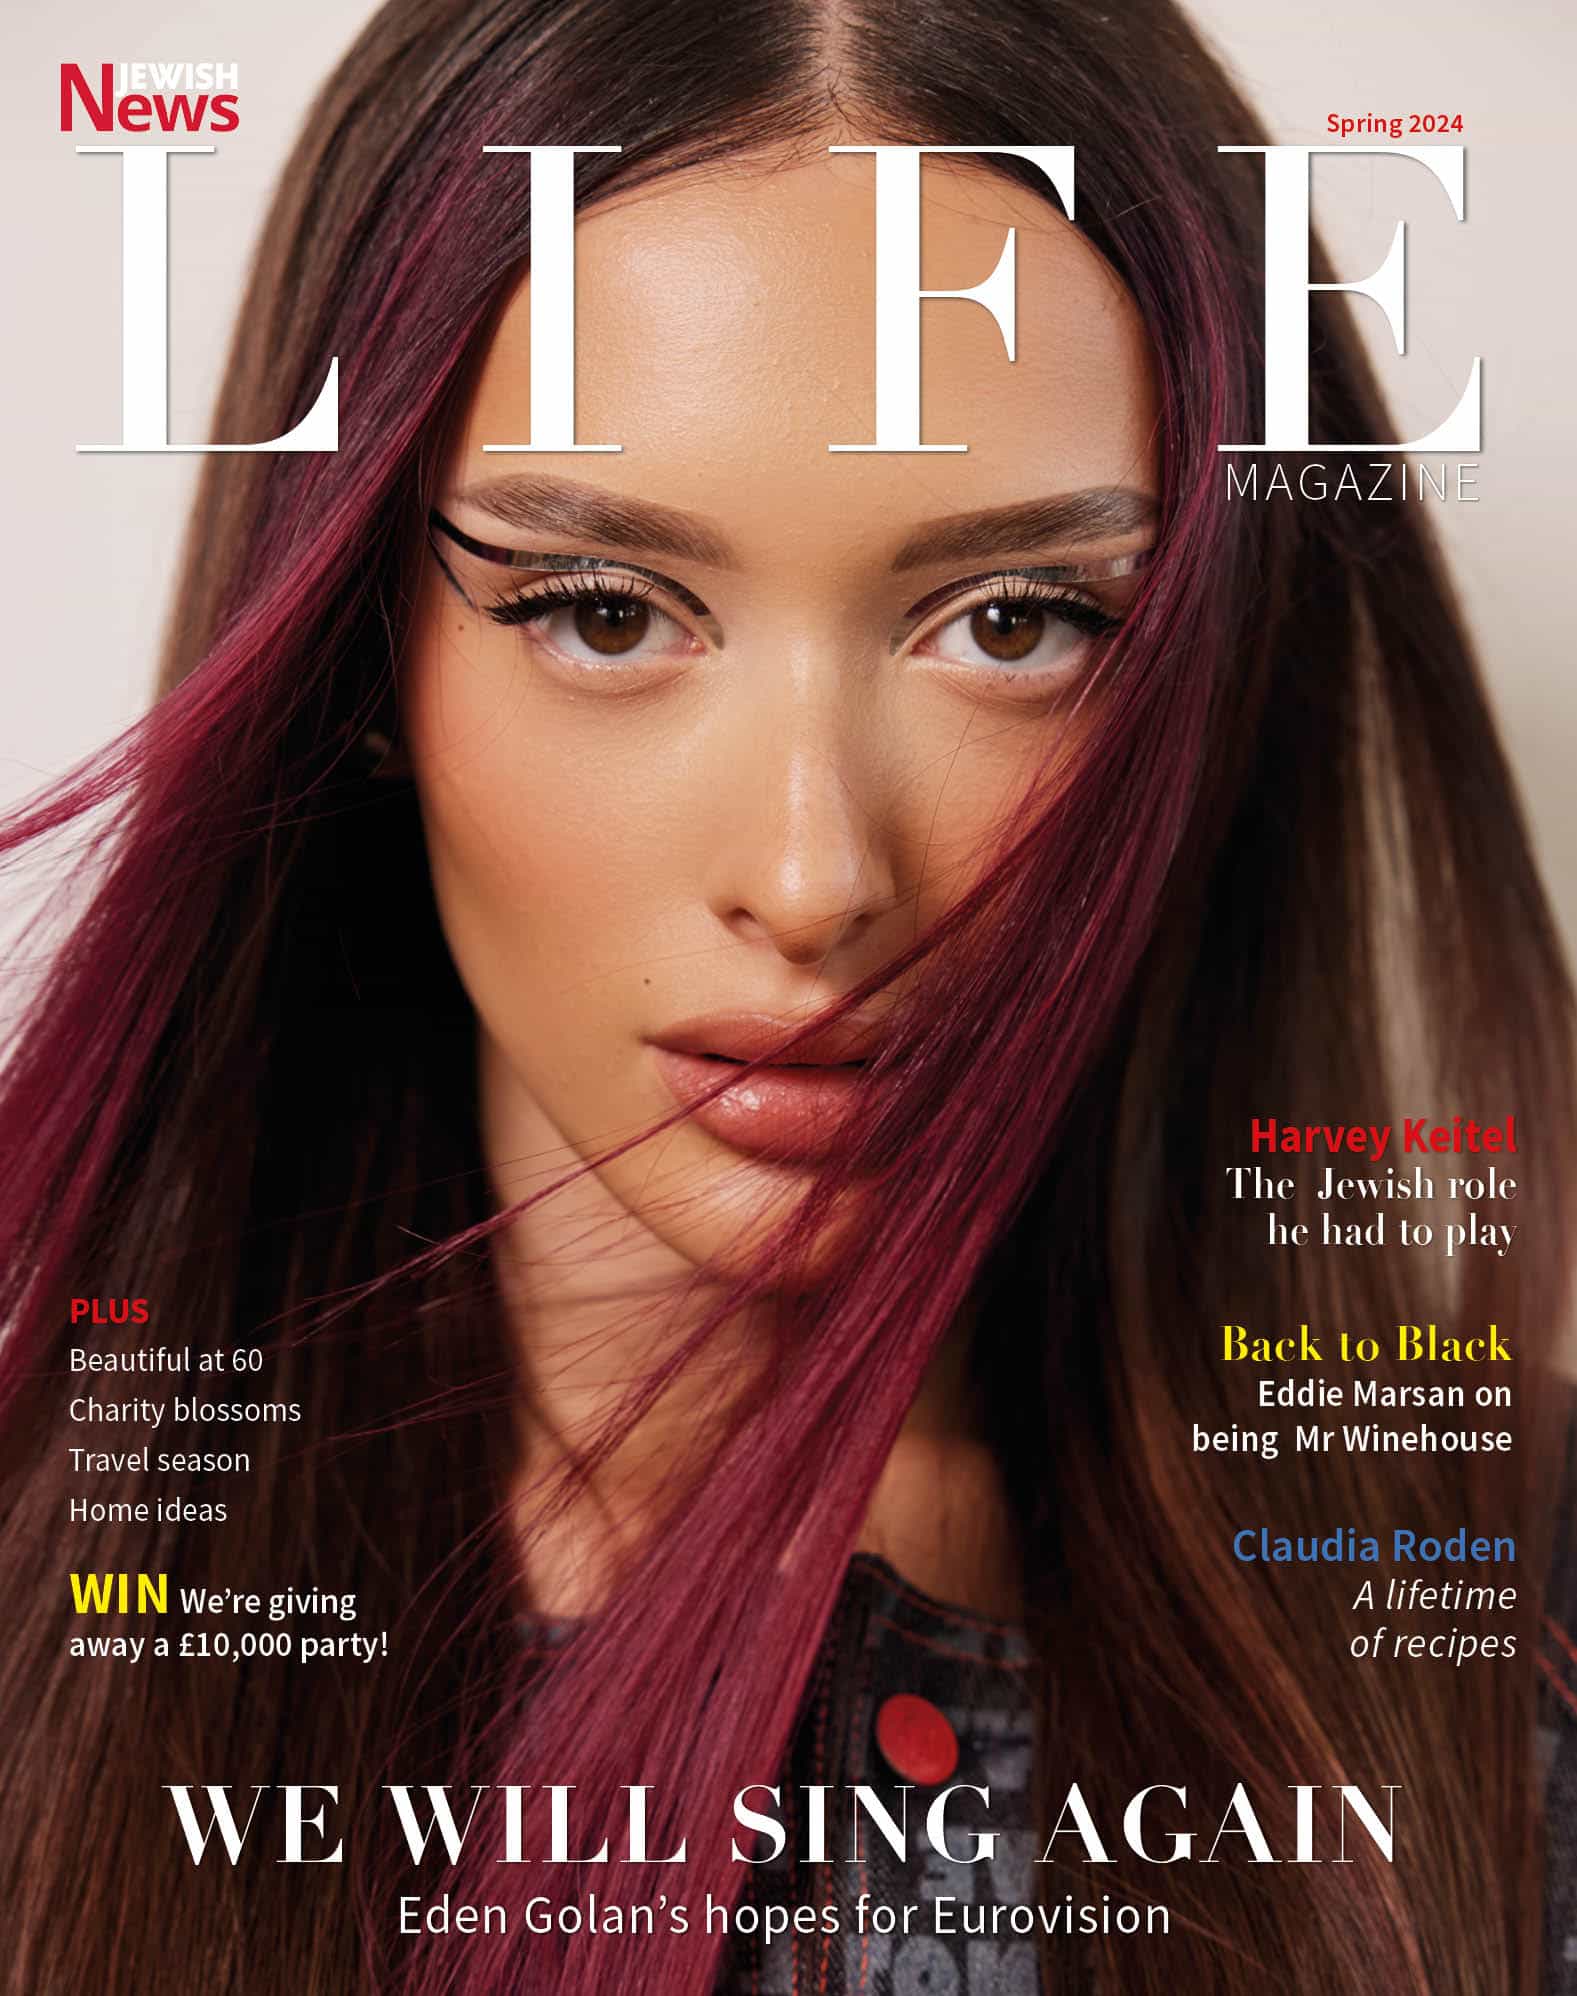 Life magazine April 2024 cover